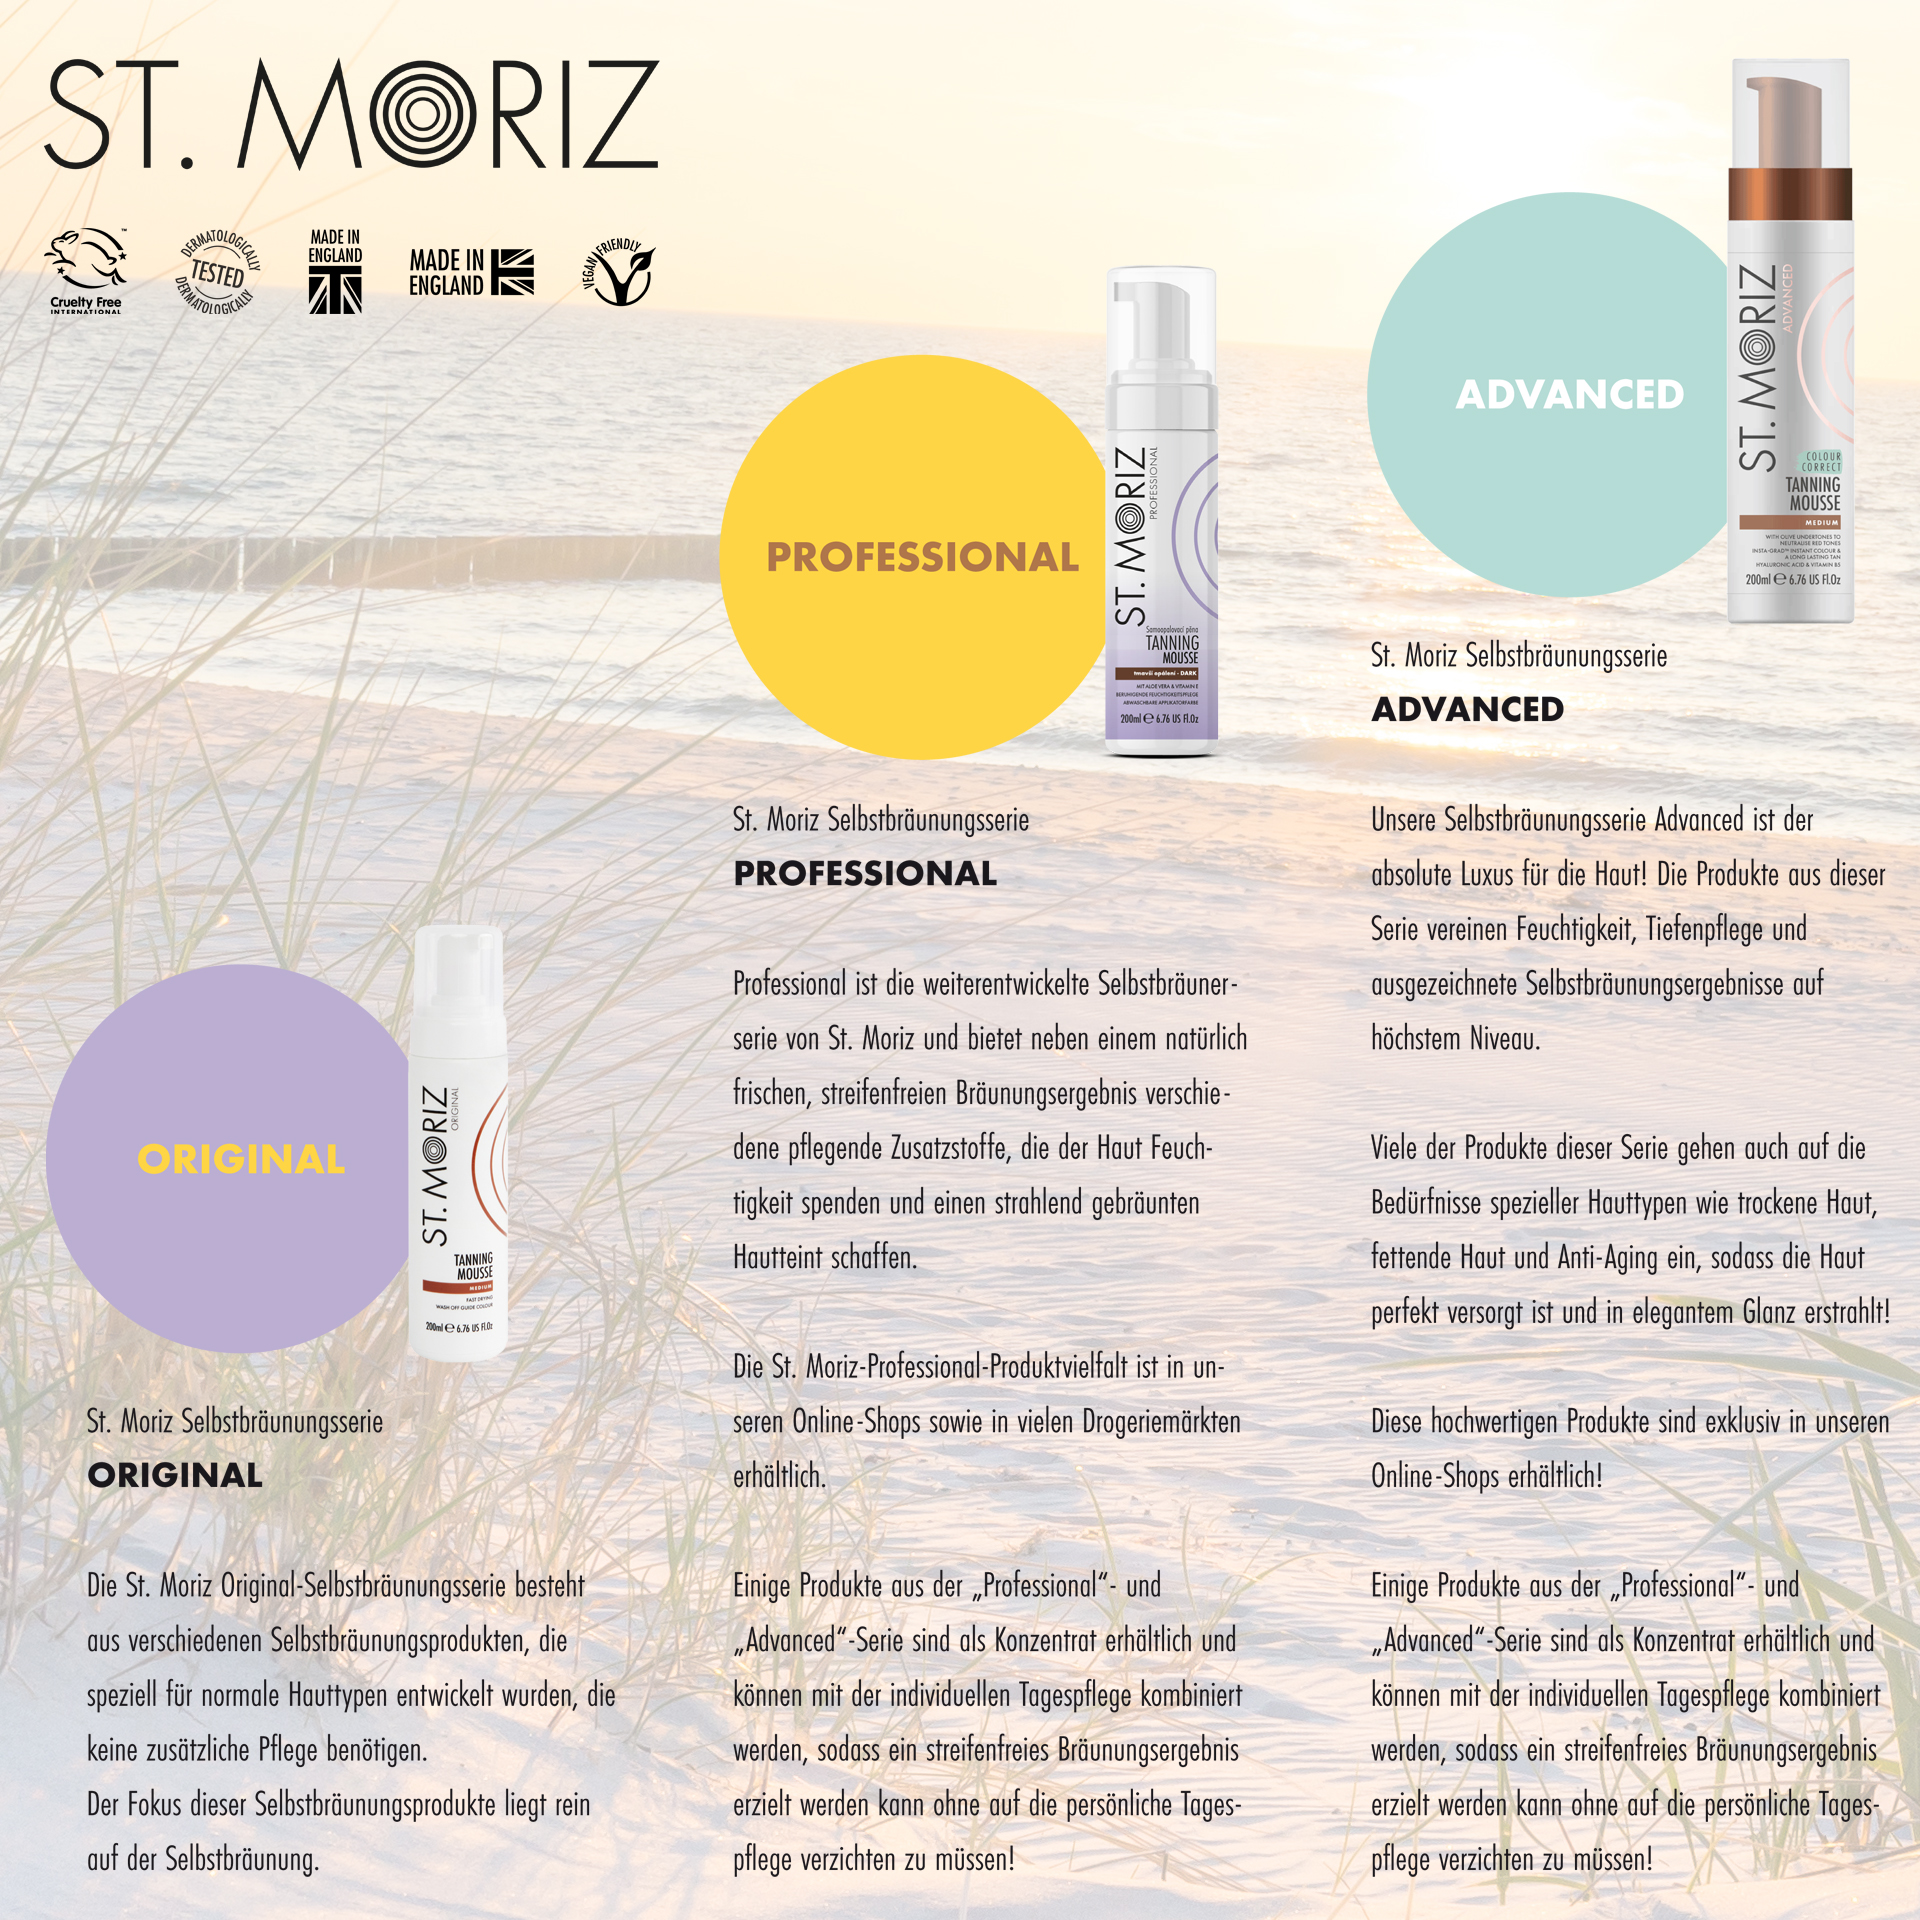 St. Moriz Professional - Transparentes Selbstbräunungsmousse 200ml